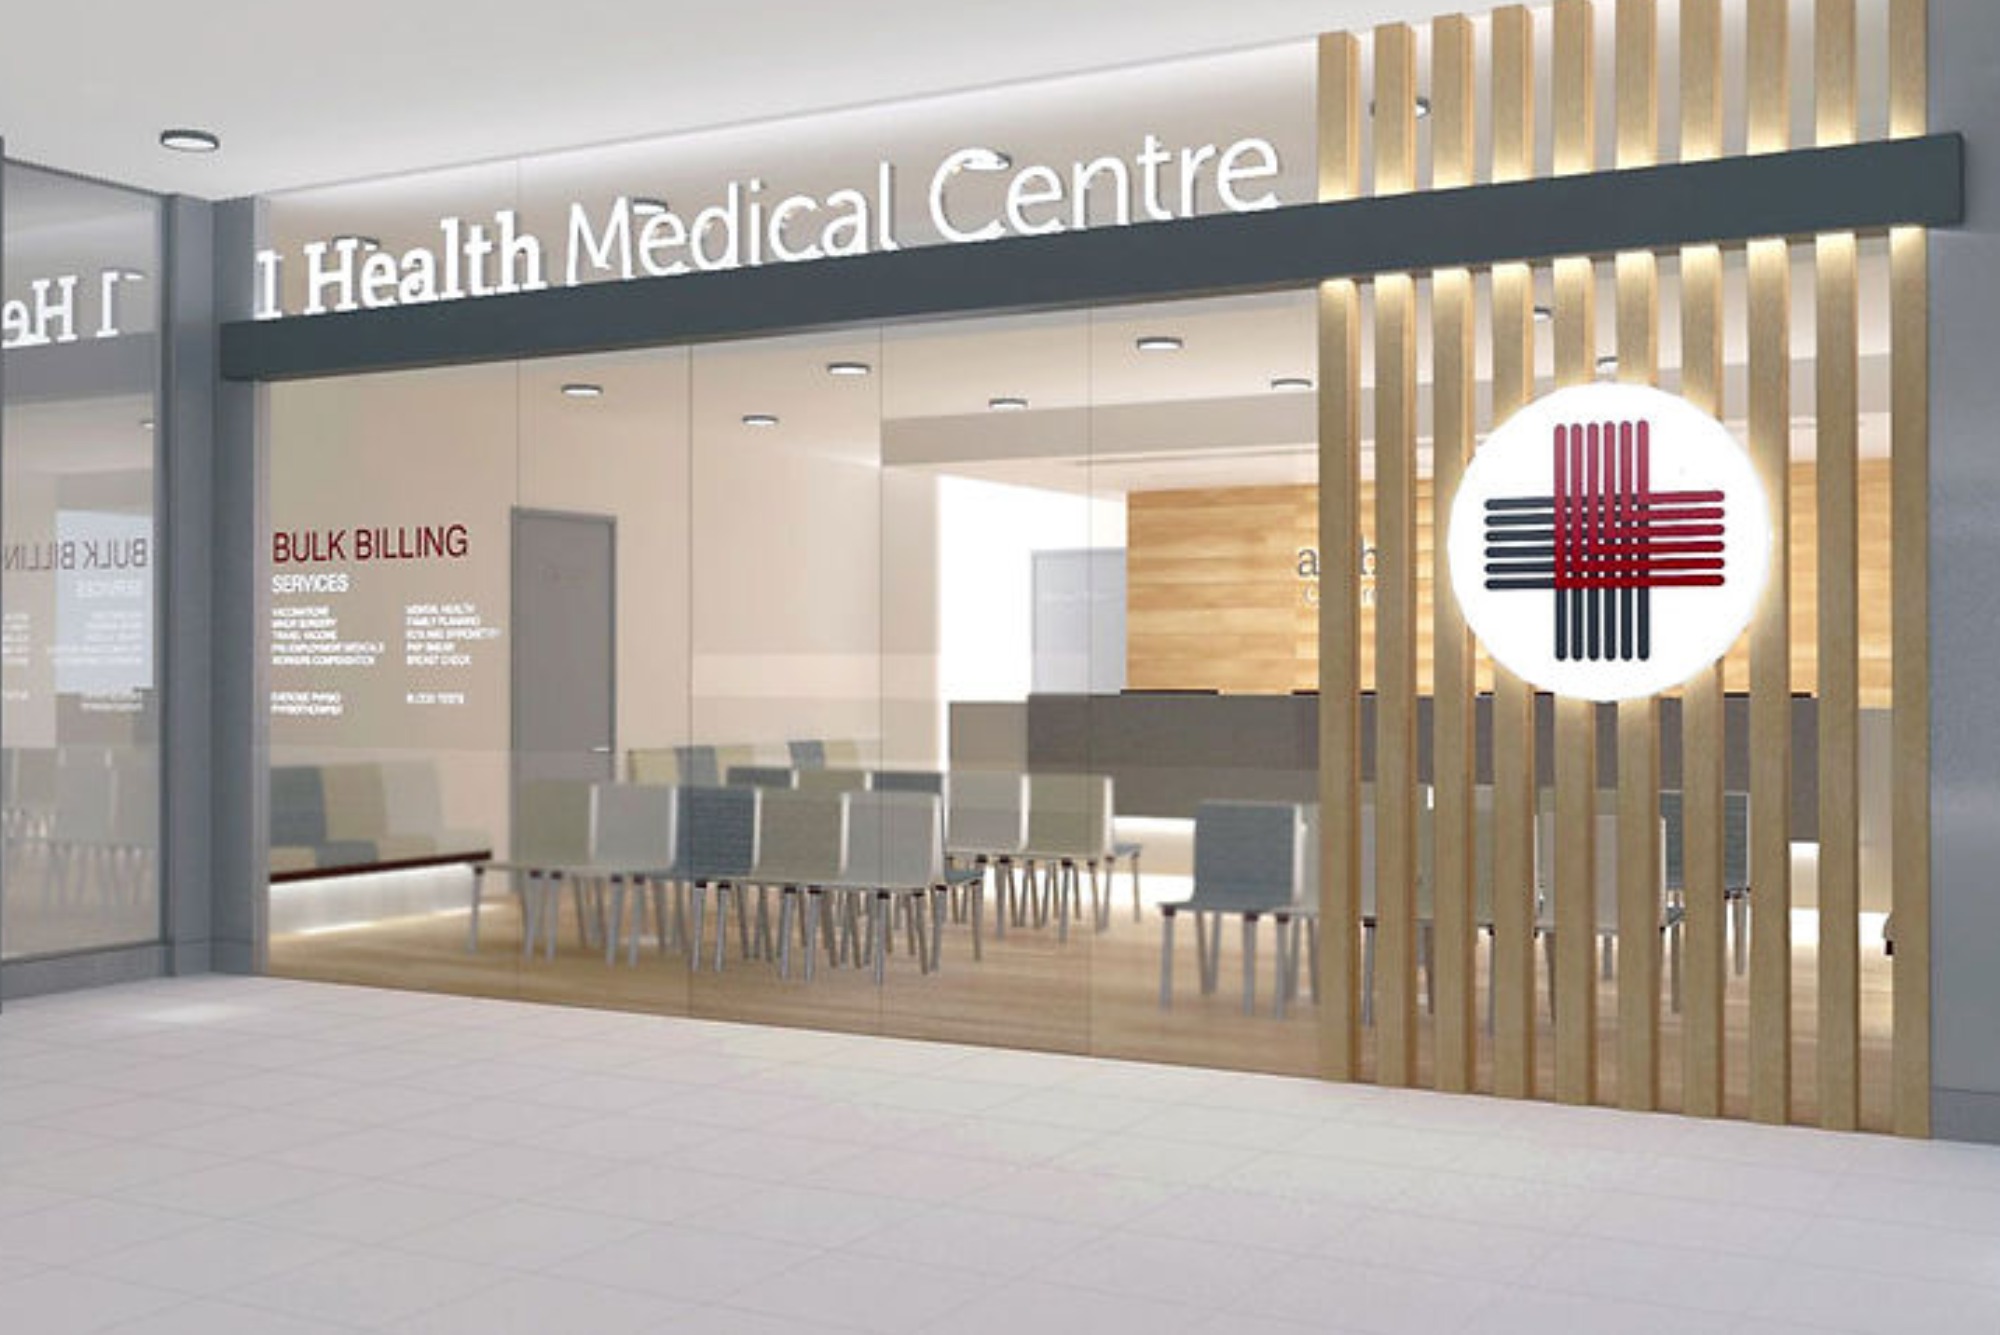 1 Health Medical Centre